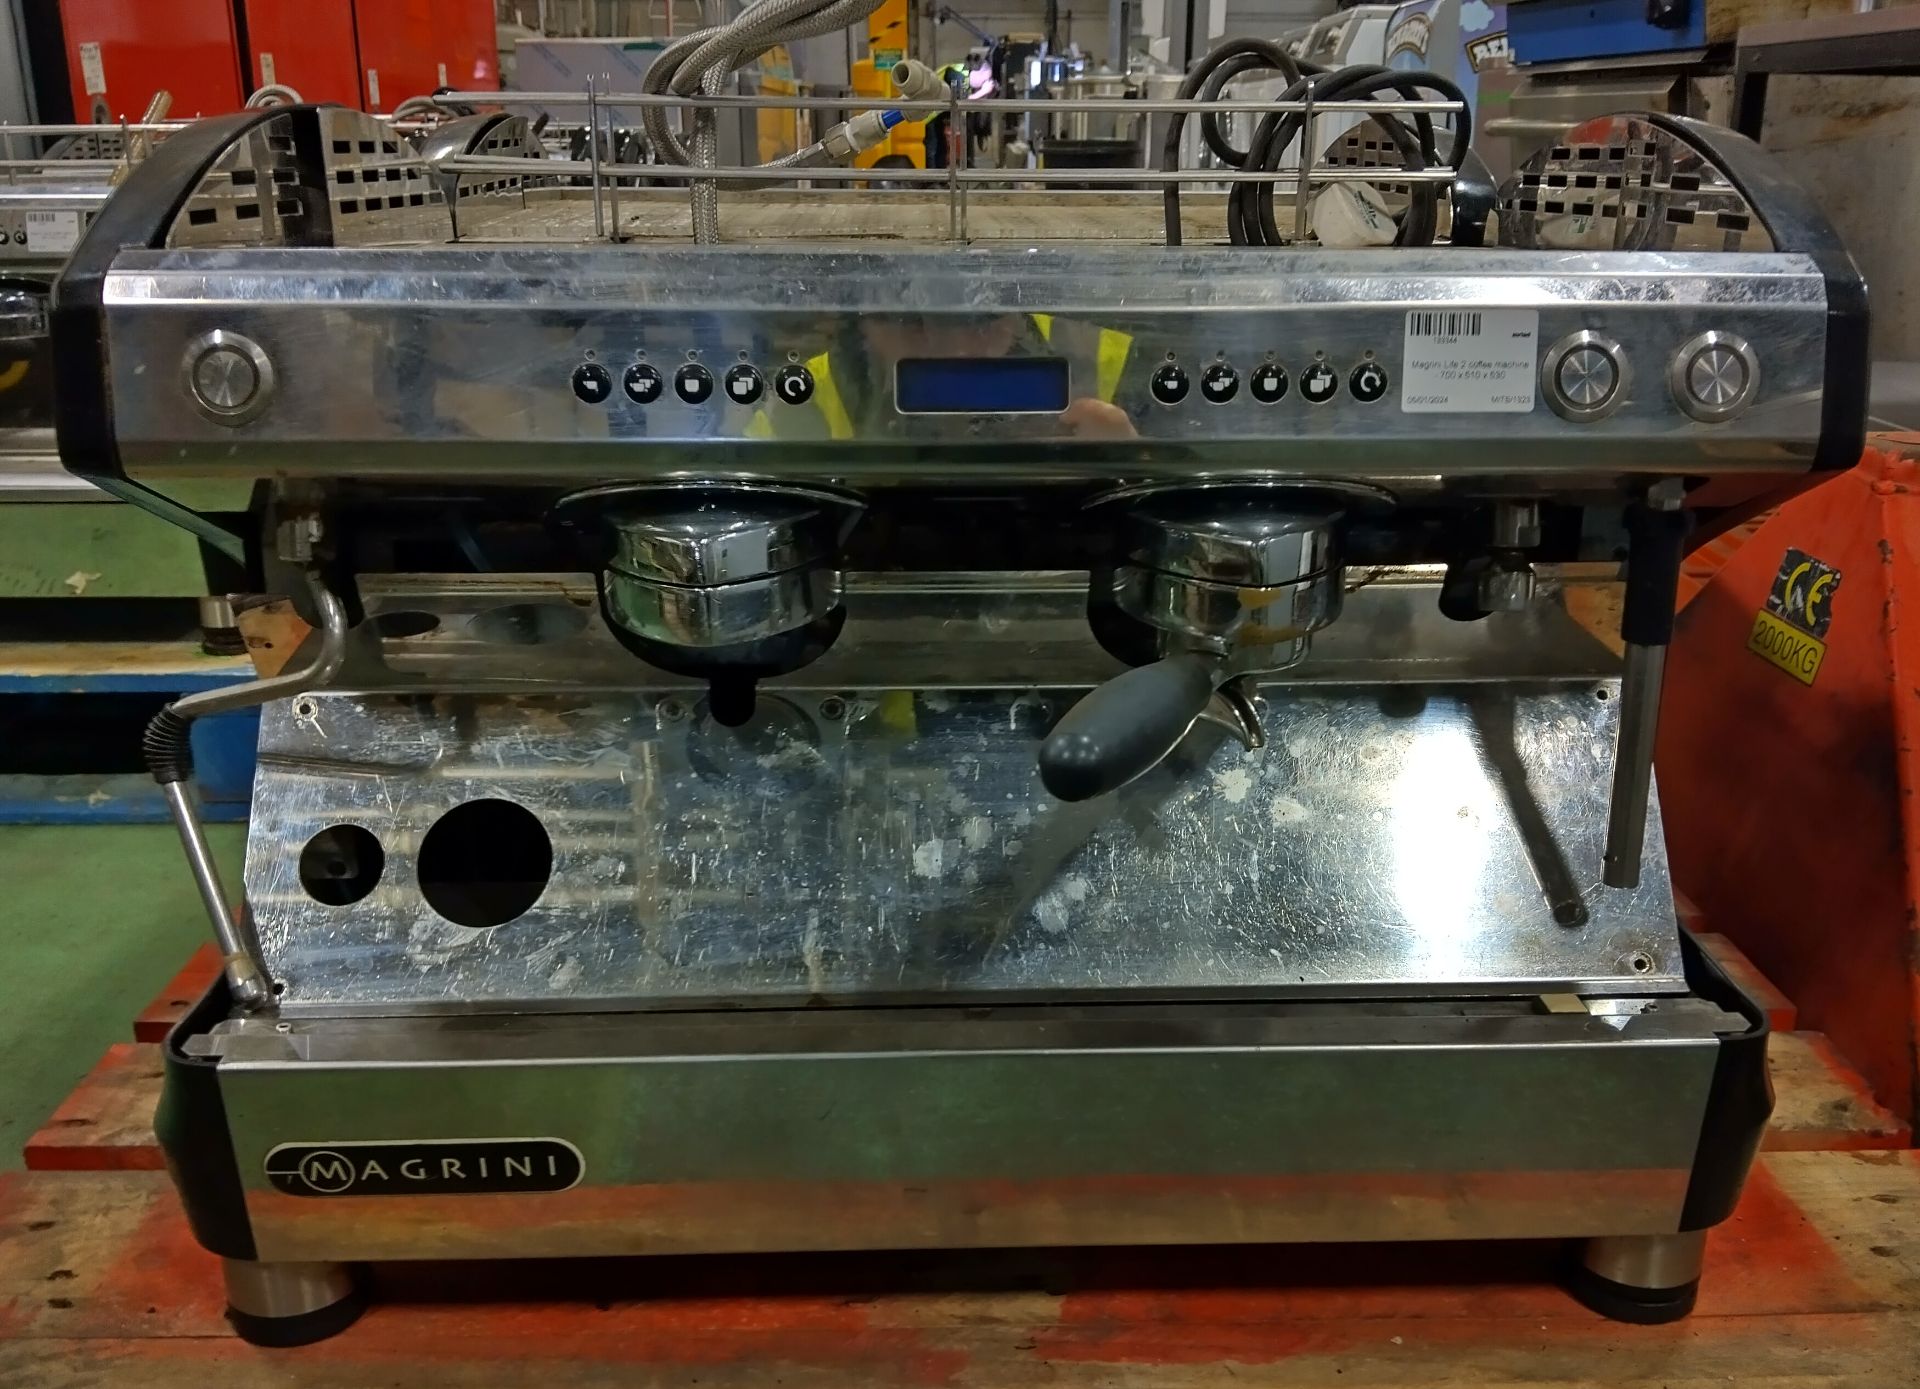 Magrini Life 2 coffee machine (missing drip tray) - 700 x 510 x 530mm - Image 3 of 4